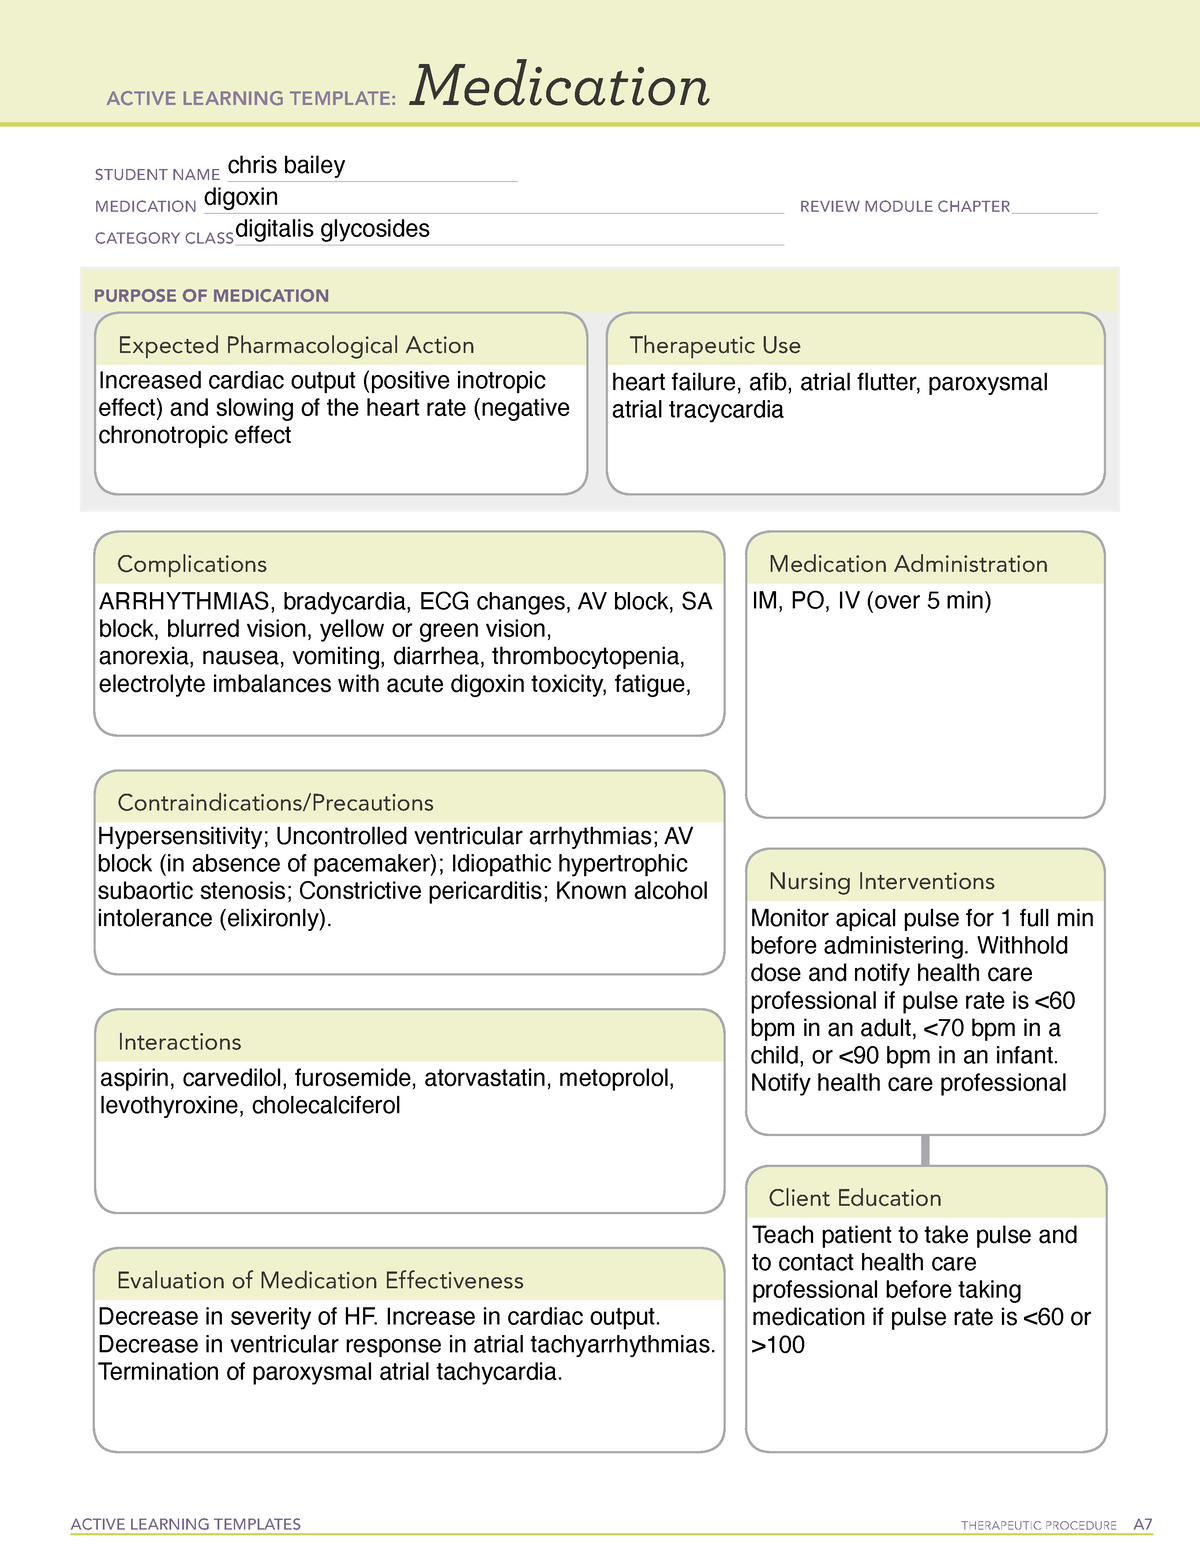 digoxin-ati-medication-template